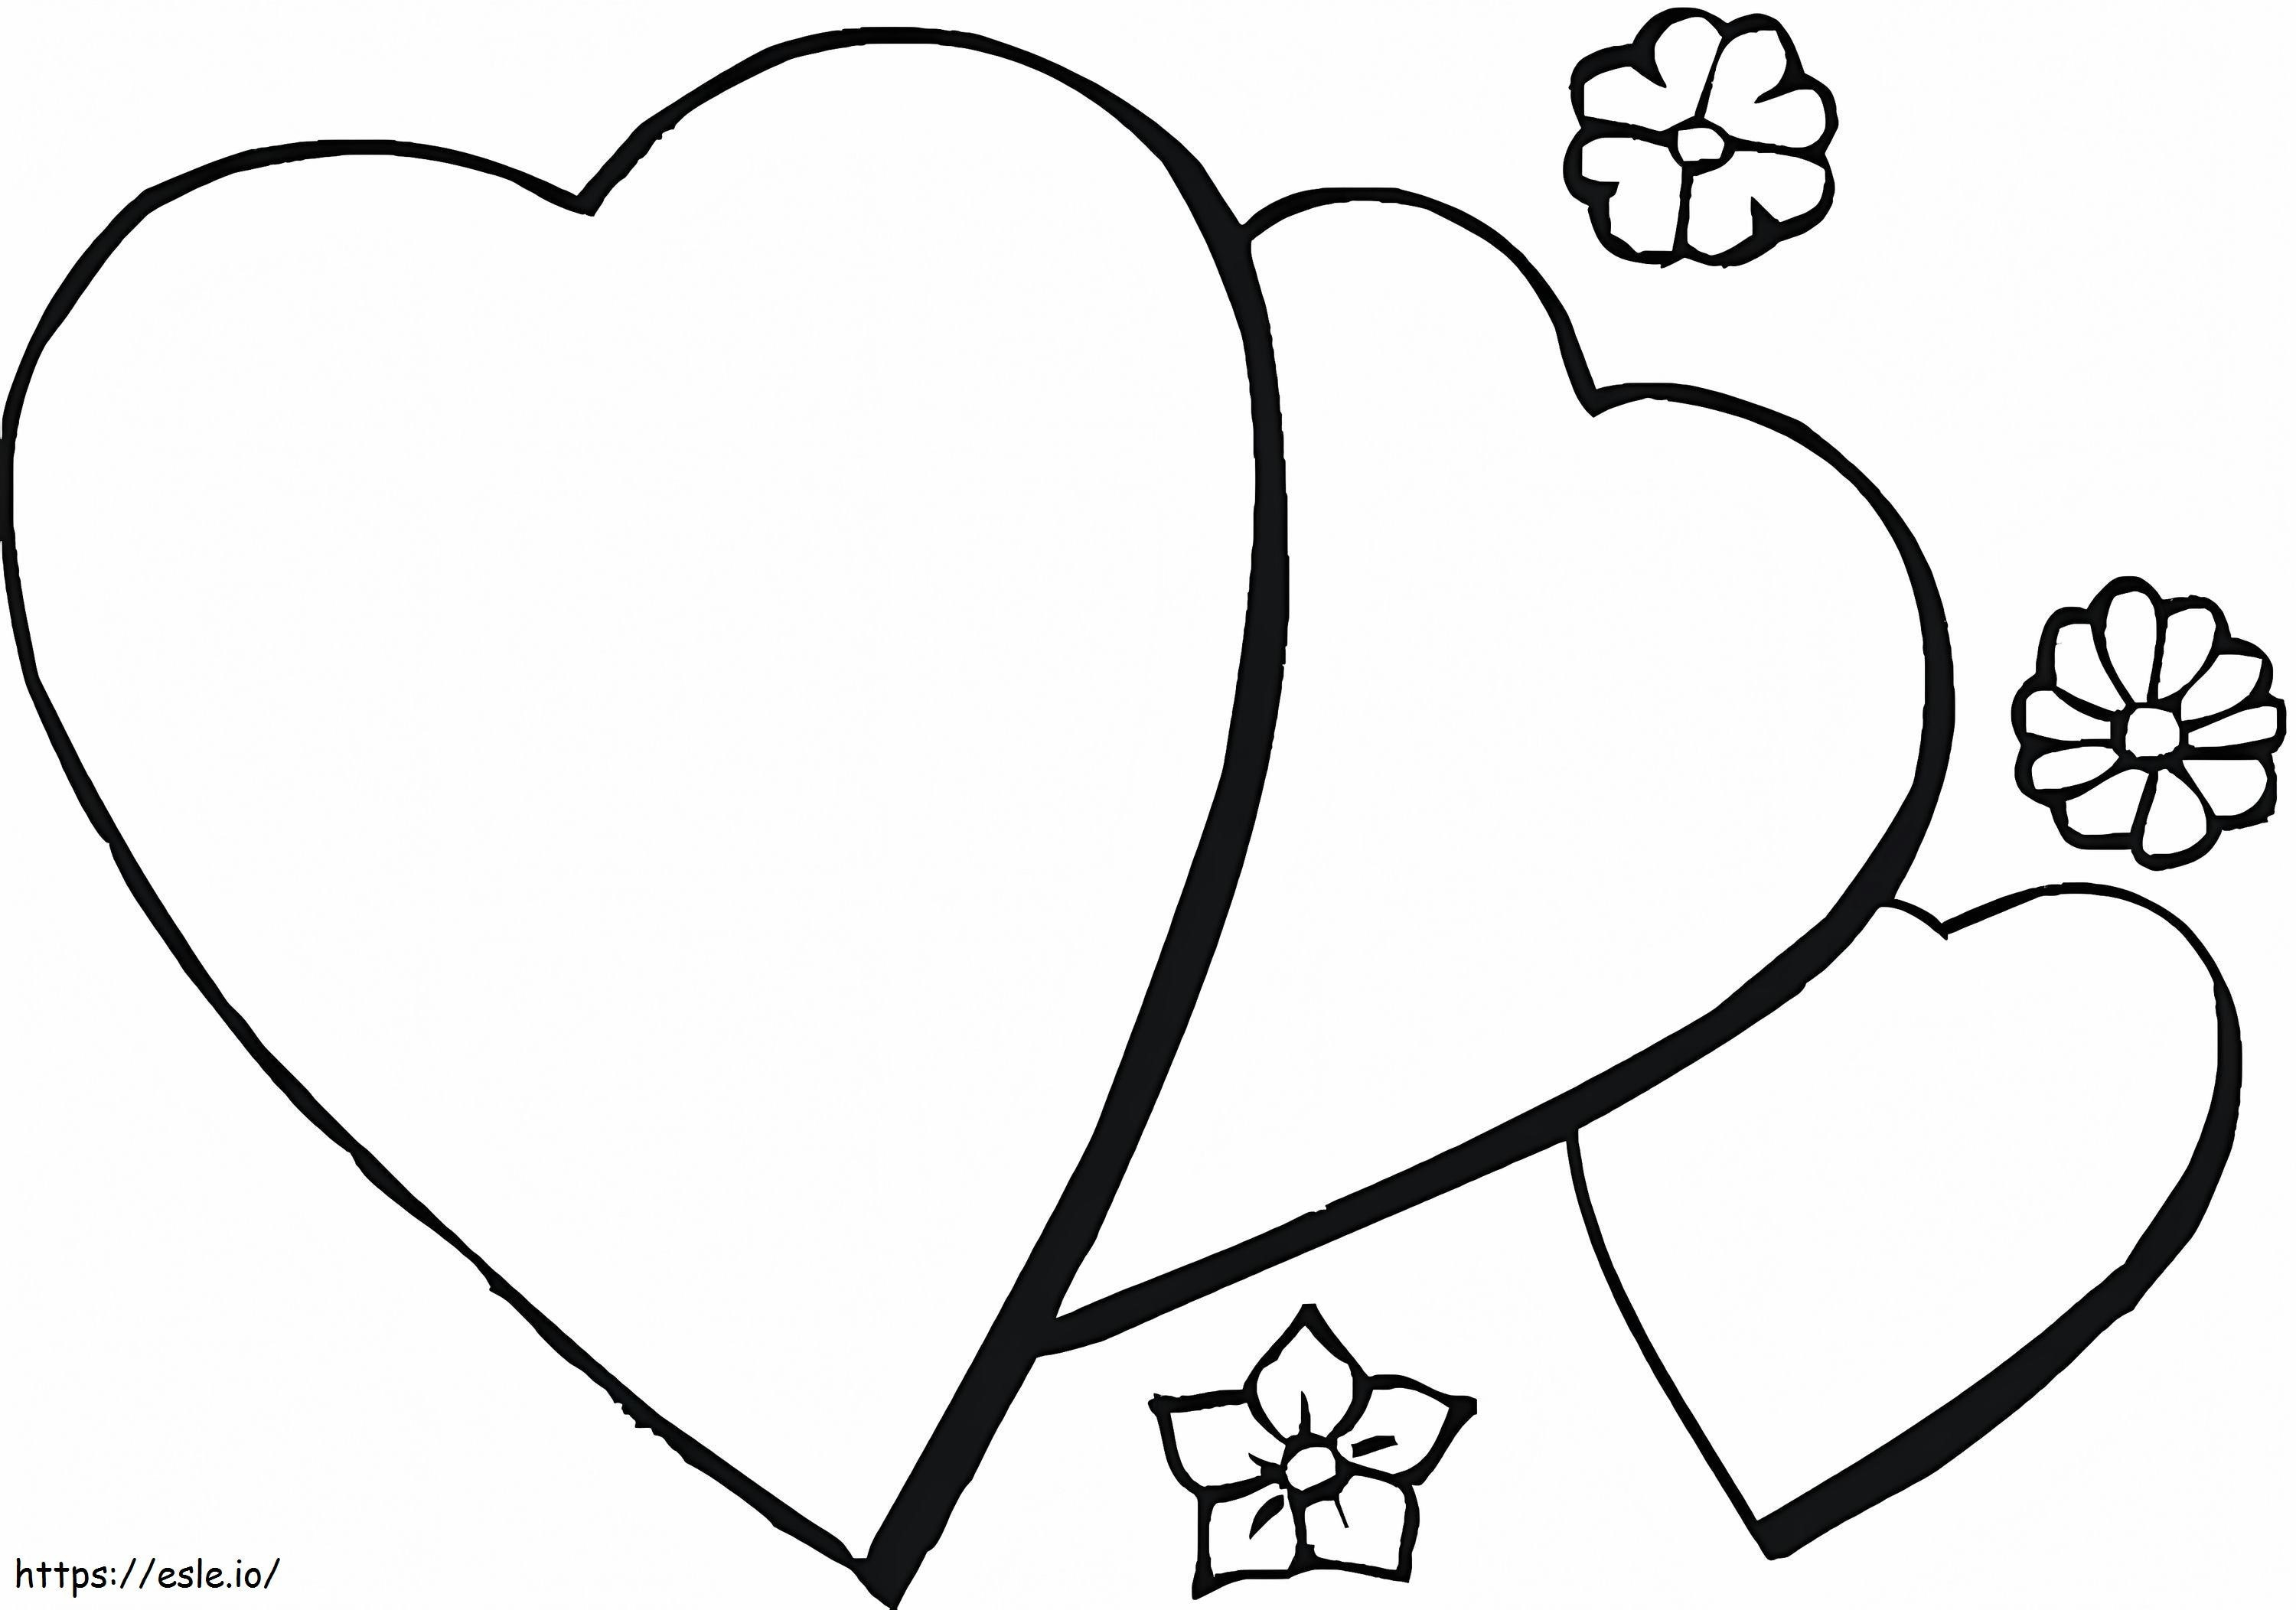 Three Hearts coloring page